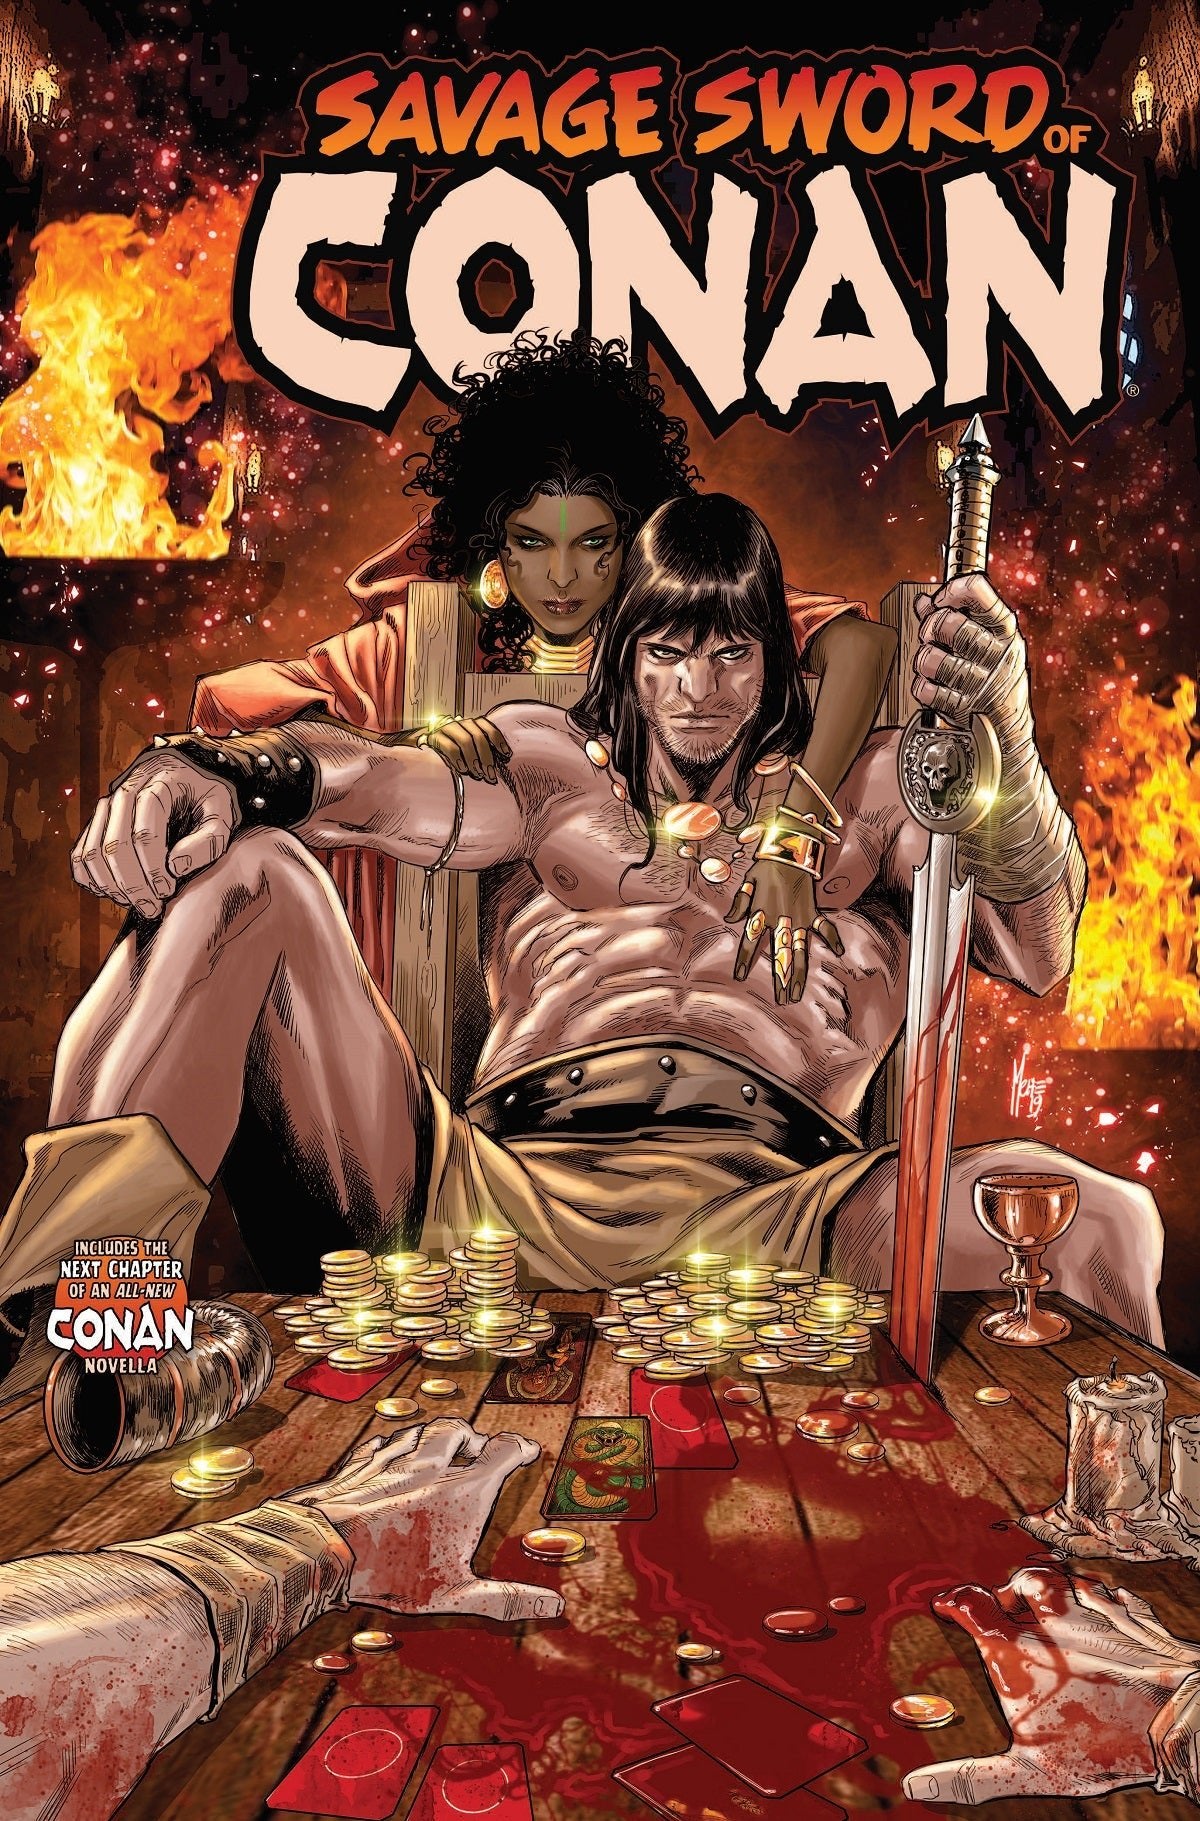 SAVAGE SWORD OF CONAN #7 - The Comic Construct